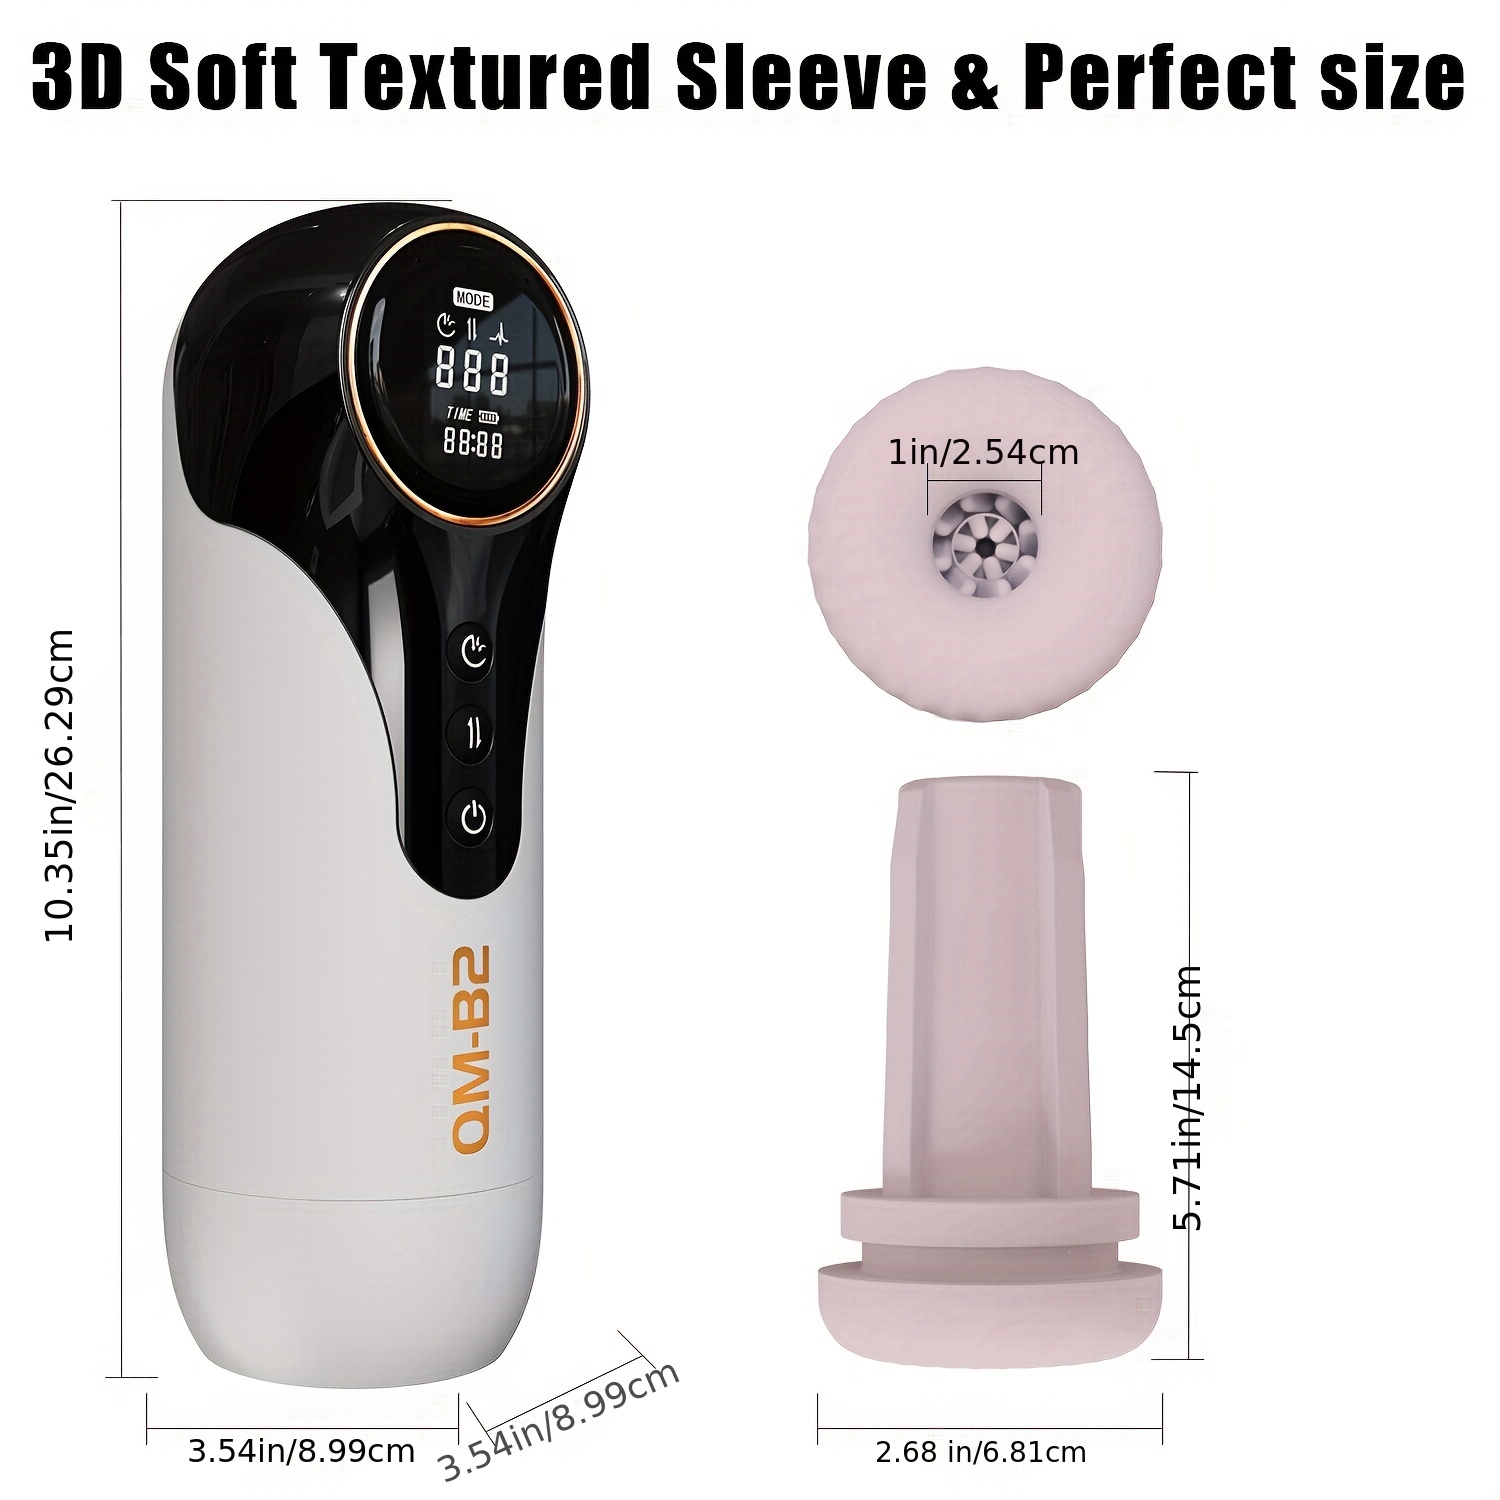 Experience Realistic Textured Man Masturbators With Multi-vibrating Modes - Male Masturbators Cup Adult Sex Toys